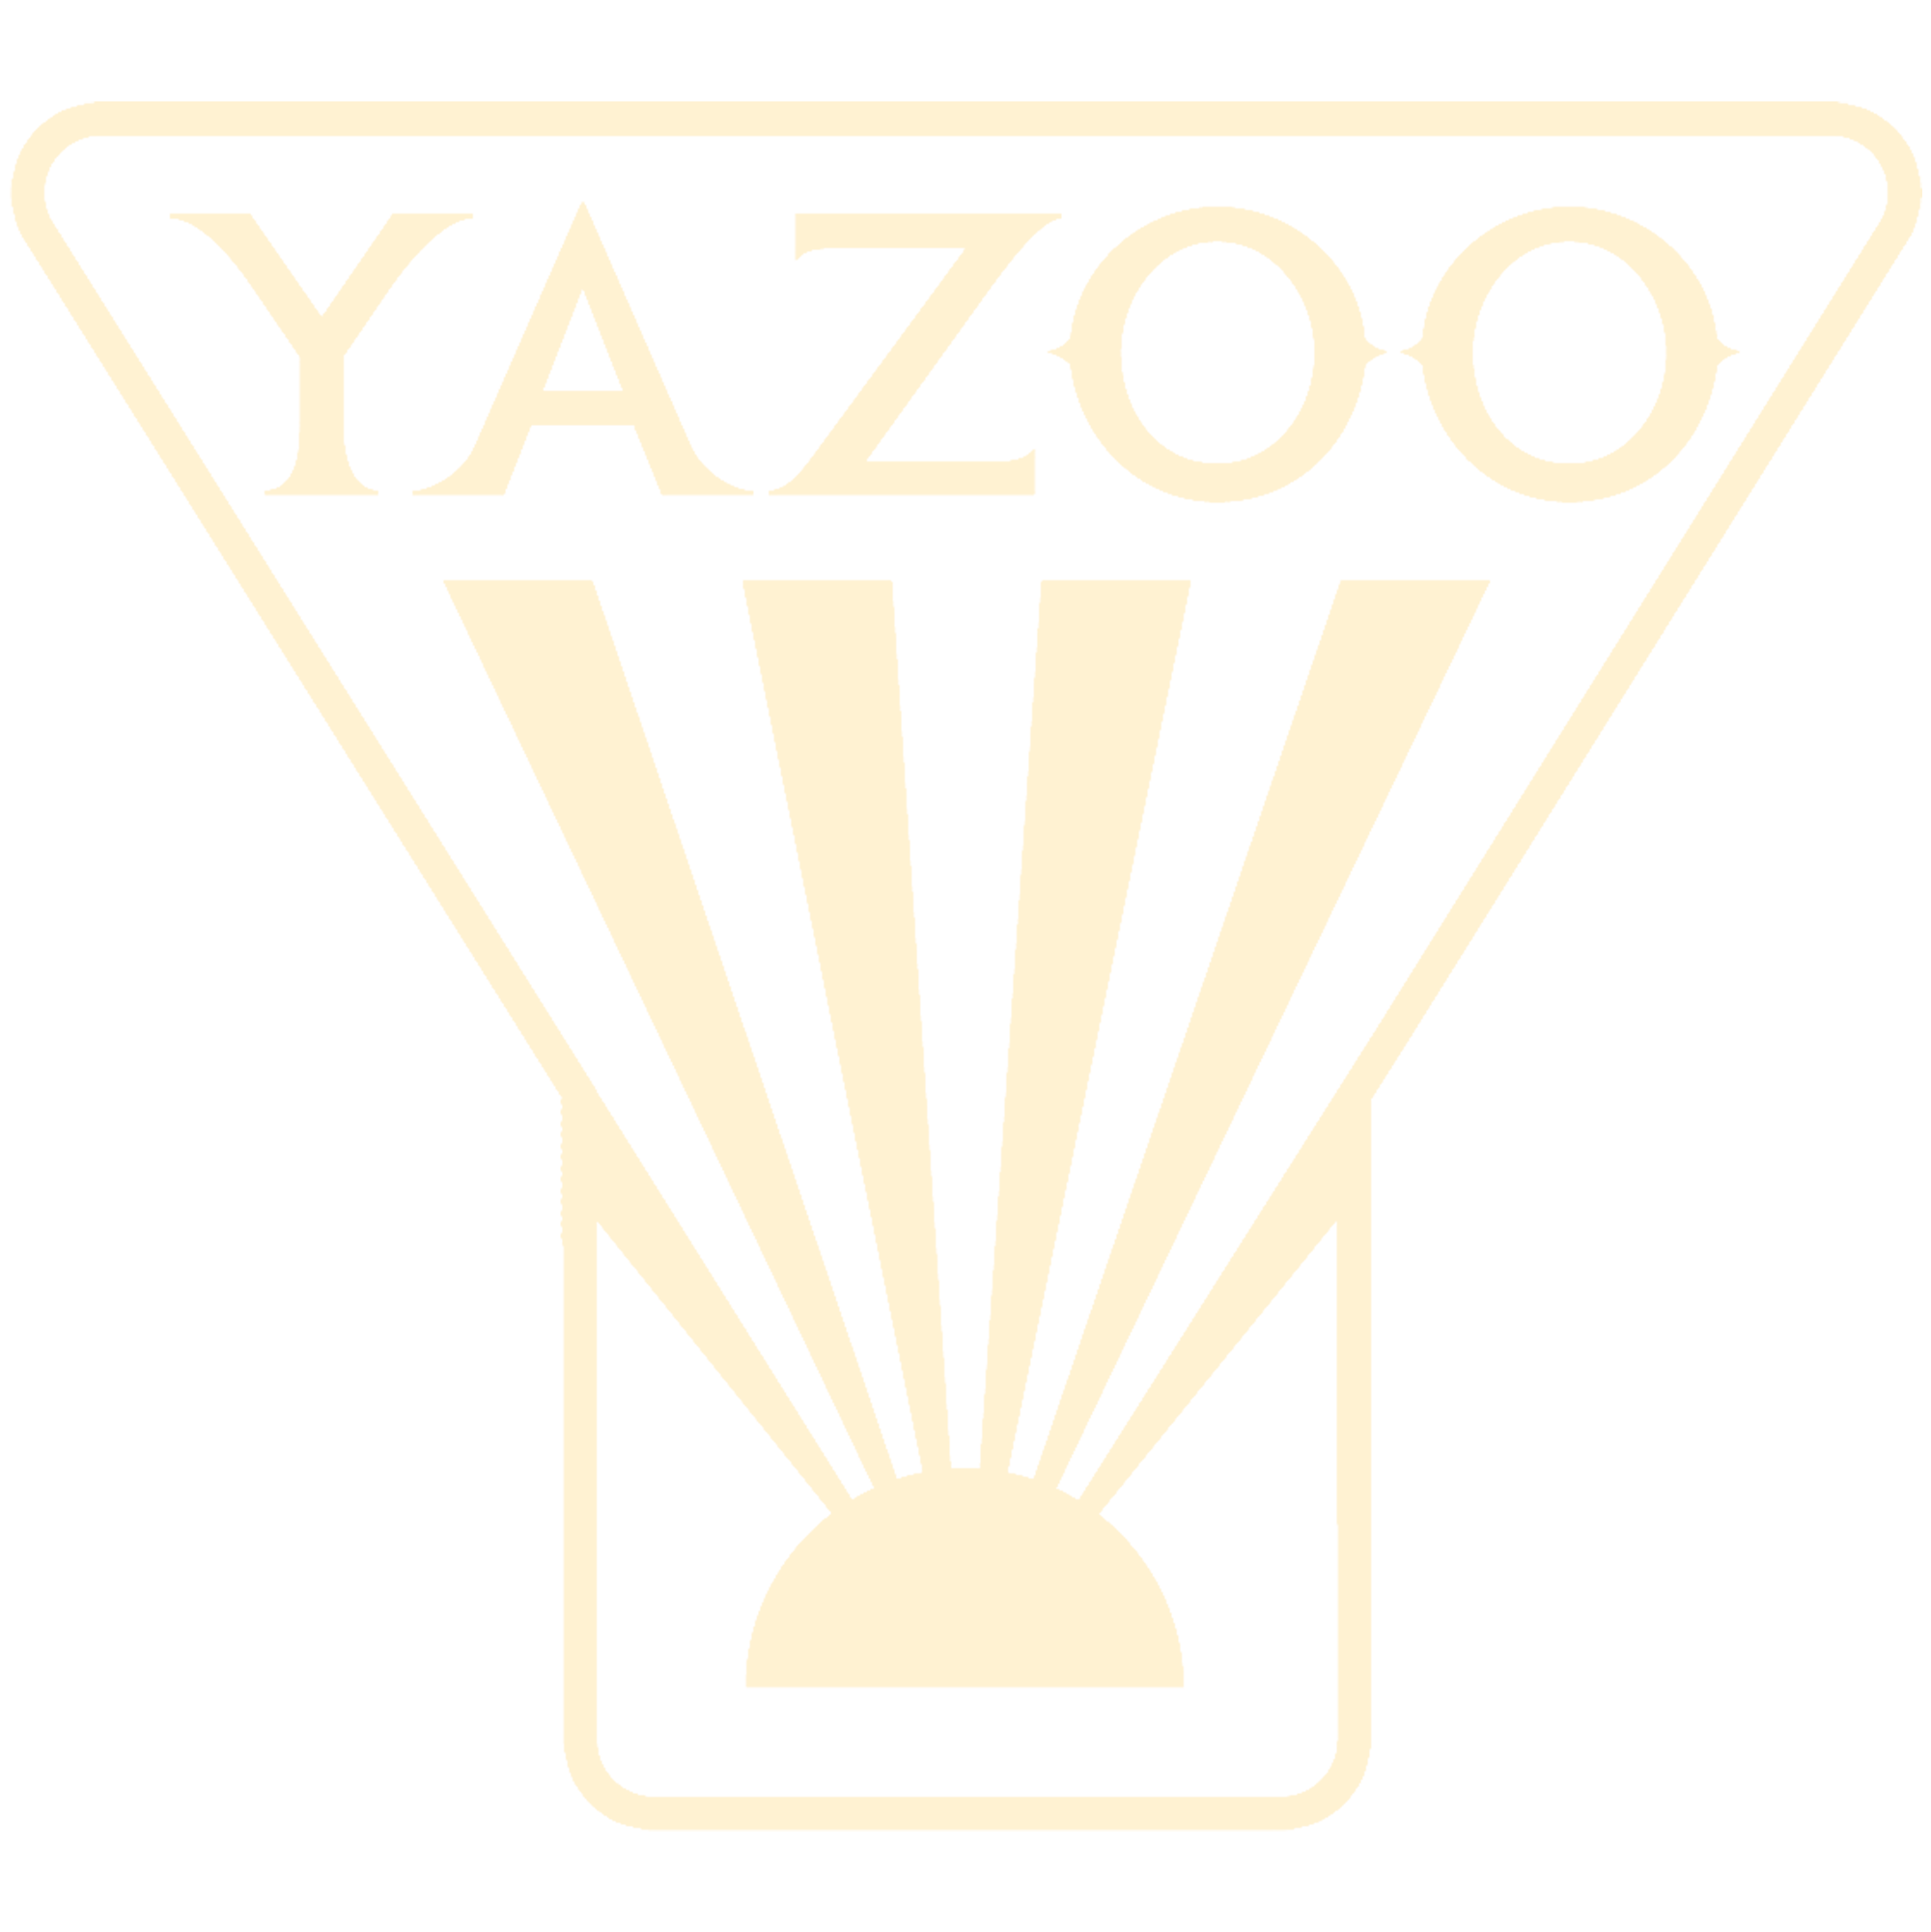 Yazoo logo tan